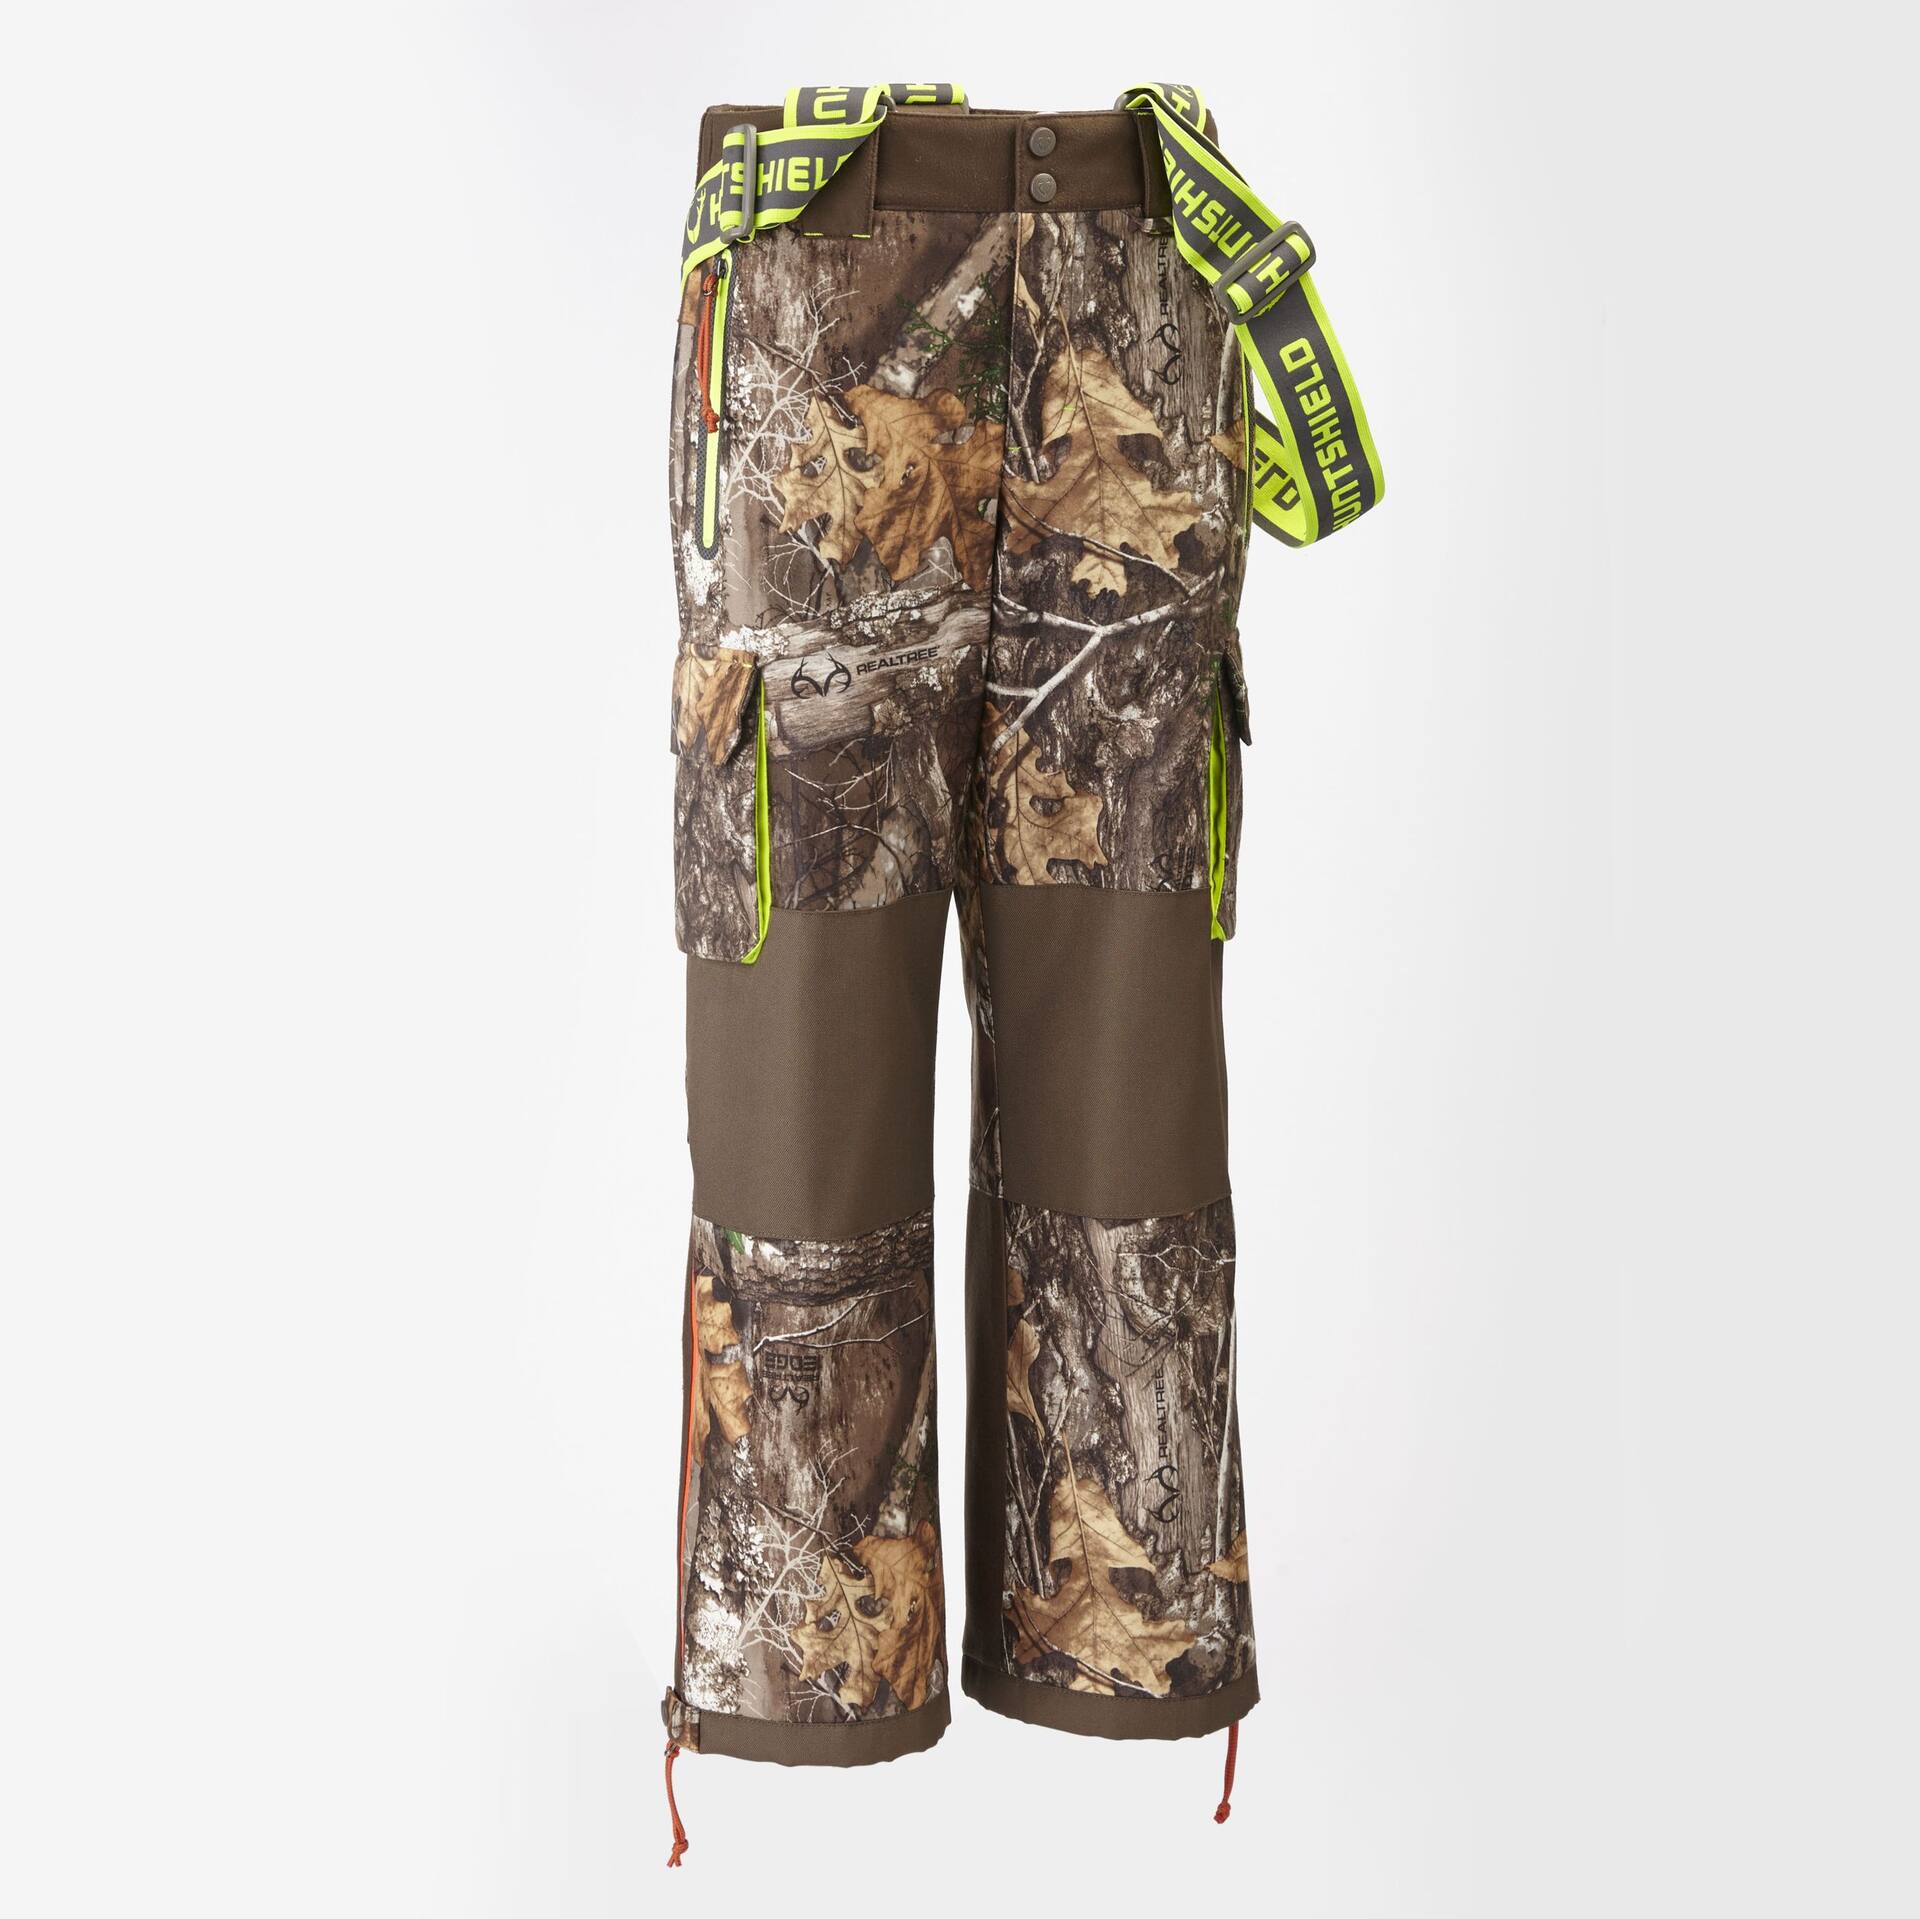 Hart hunting Weiter Pants Green | Hunting